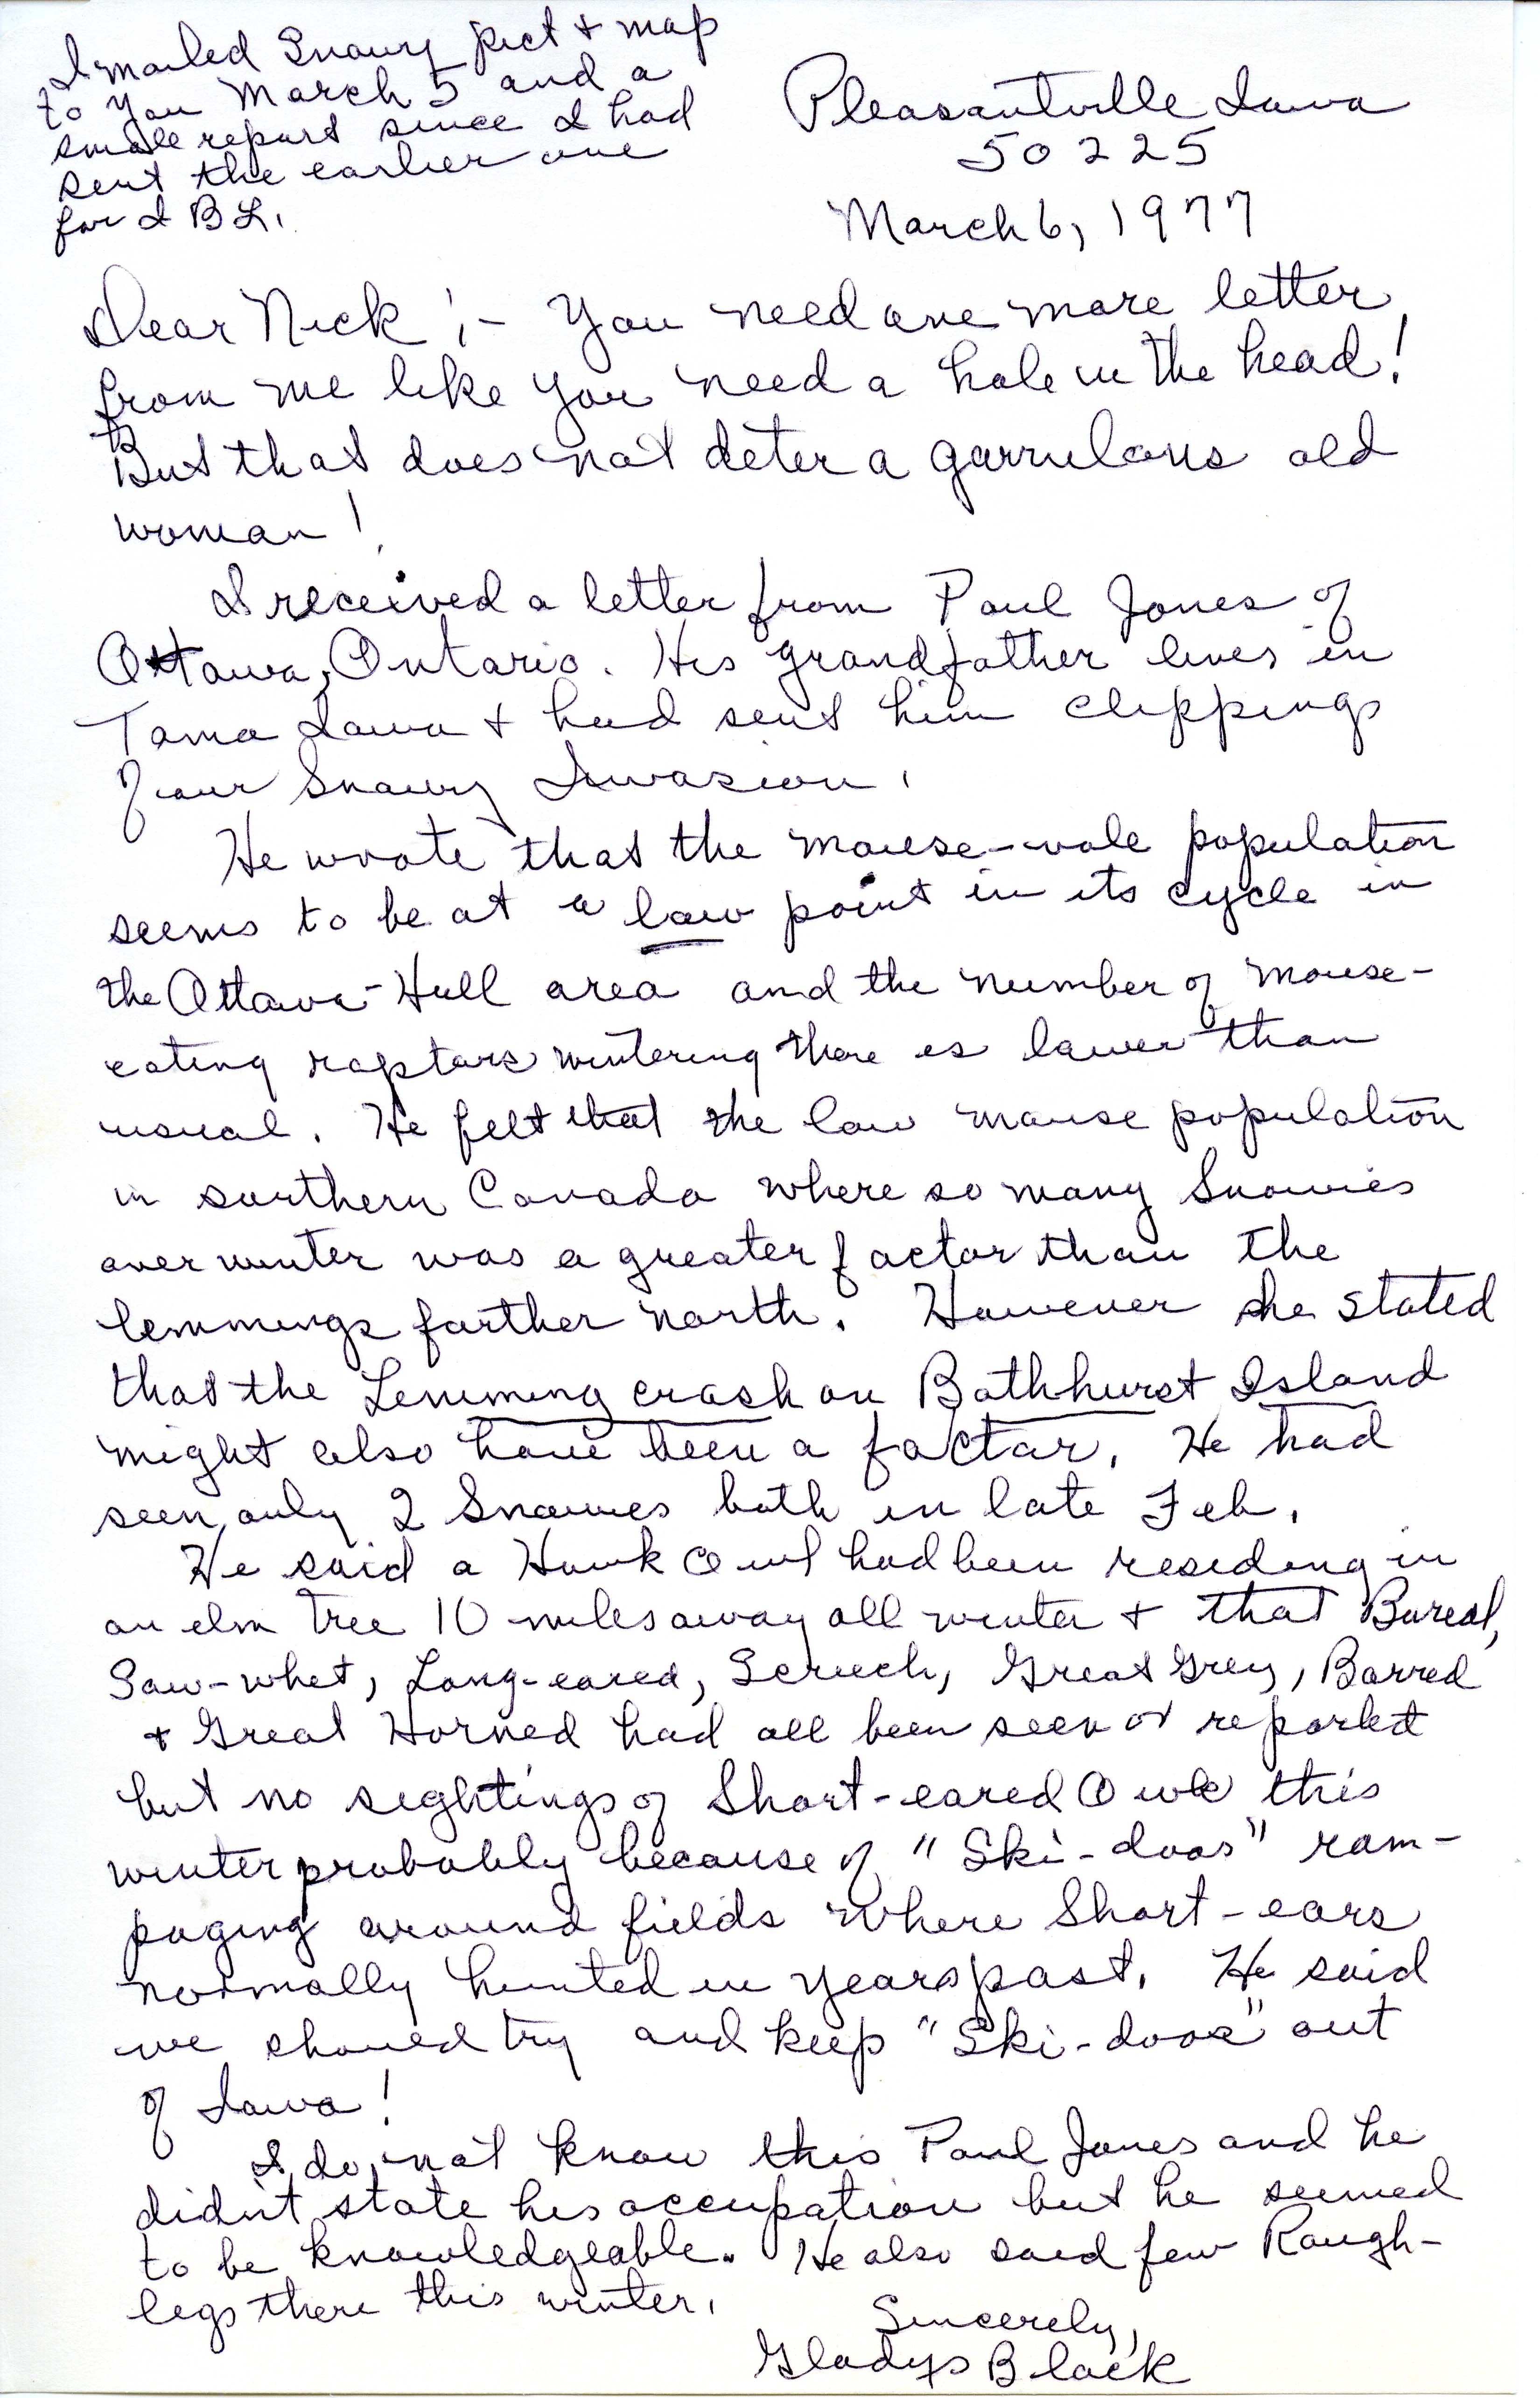 Gladys Black letter to Nicholas S. Halmi, regarding bird sightings, March 6, 1977 